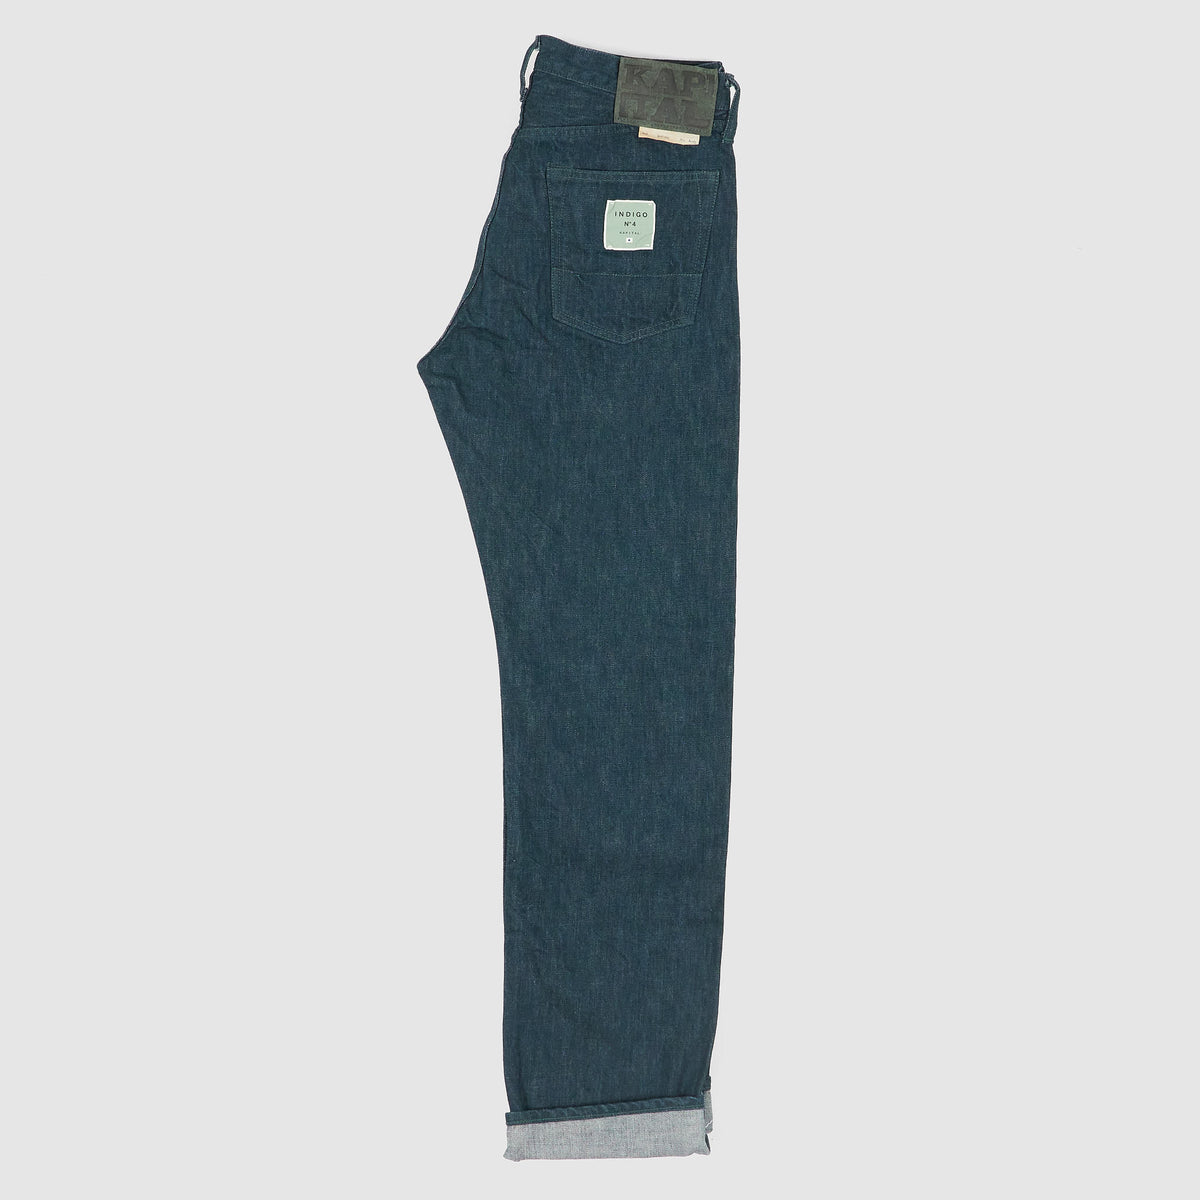 Kapital 5-Pocket MoCi No.4 Plant x Indigo Dyed Jeans